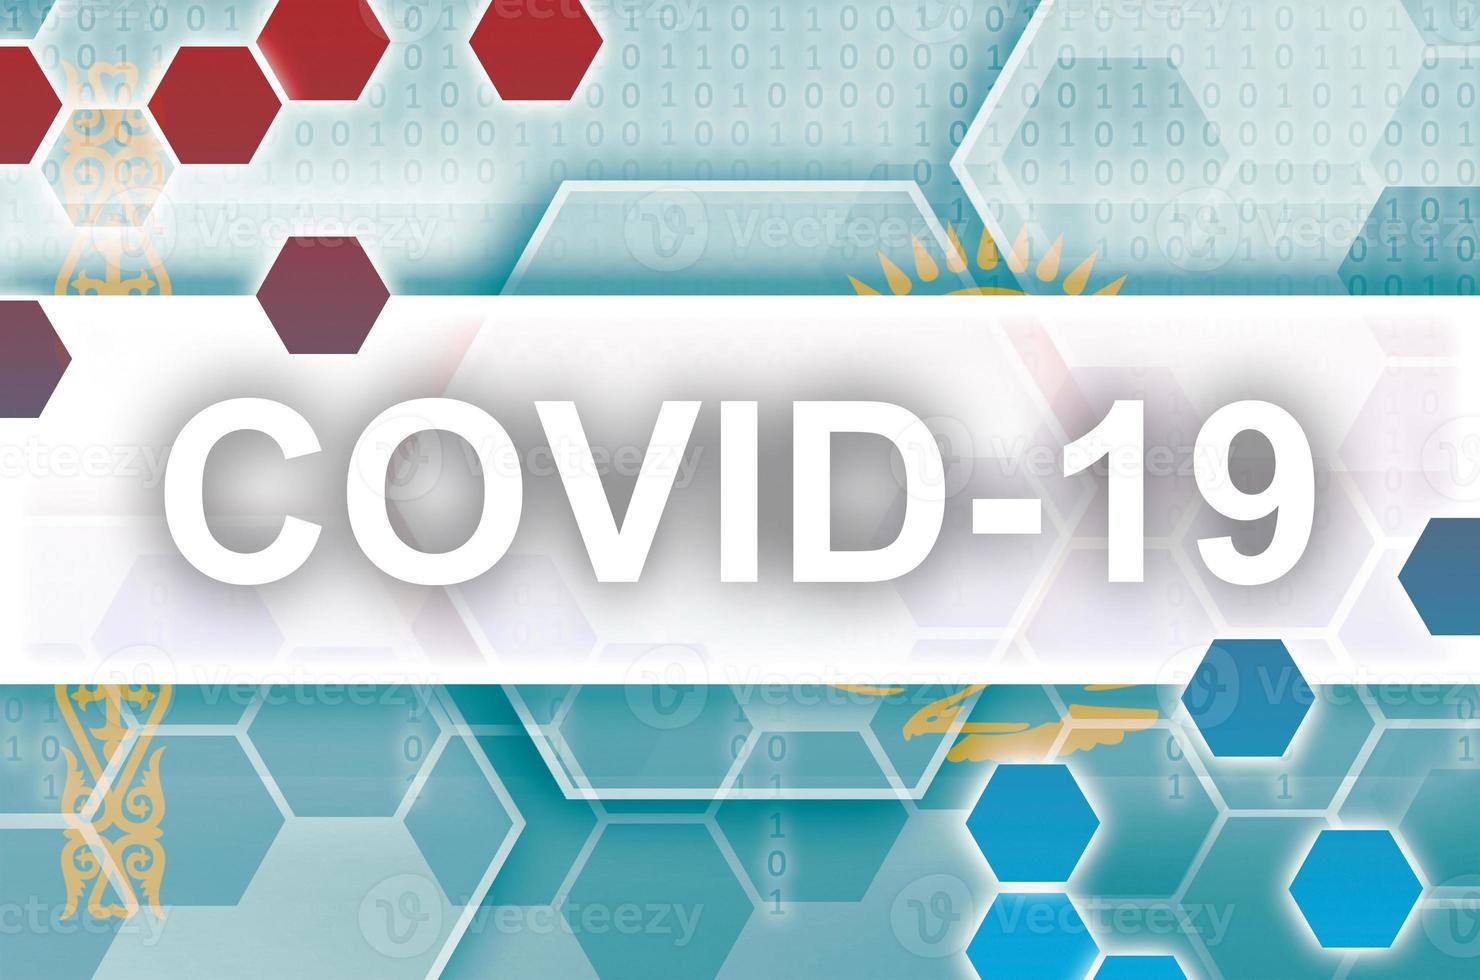 Kazakhstan flag and futuristic digital abstract composition with Covid-19 inscription. Coronavirus outbreak concept photo